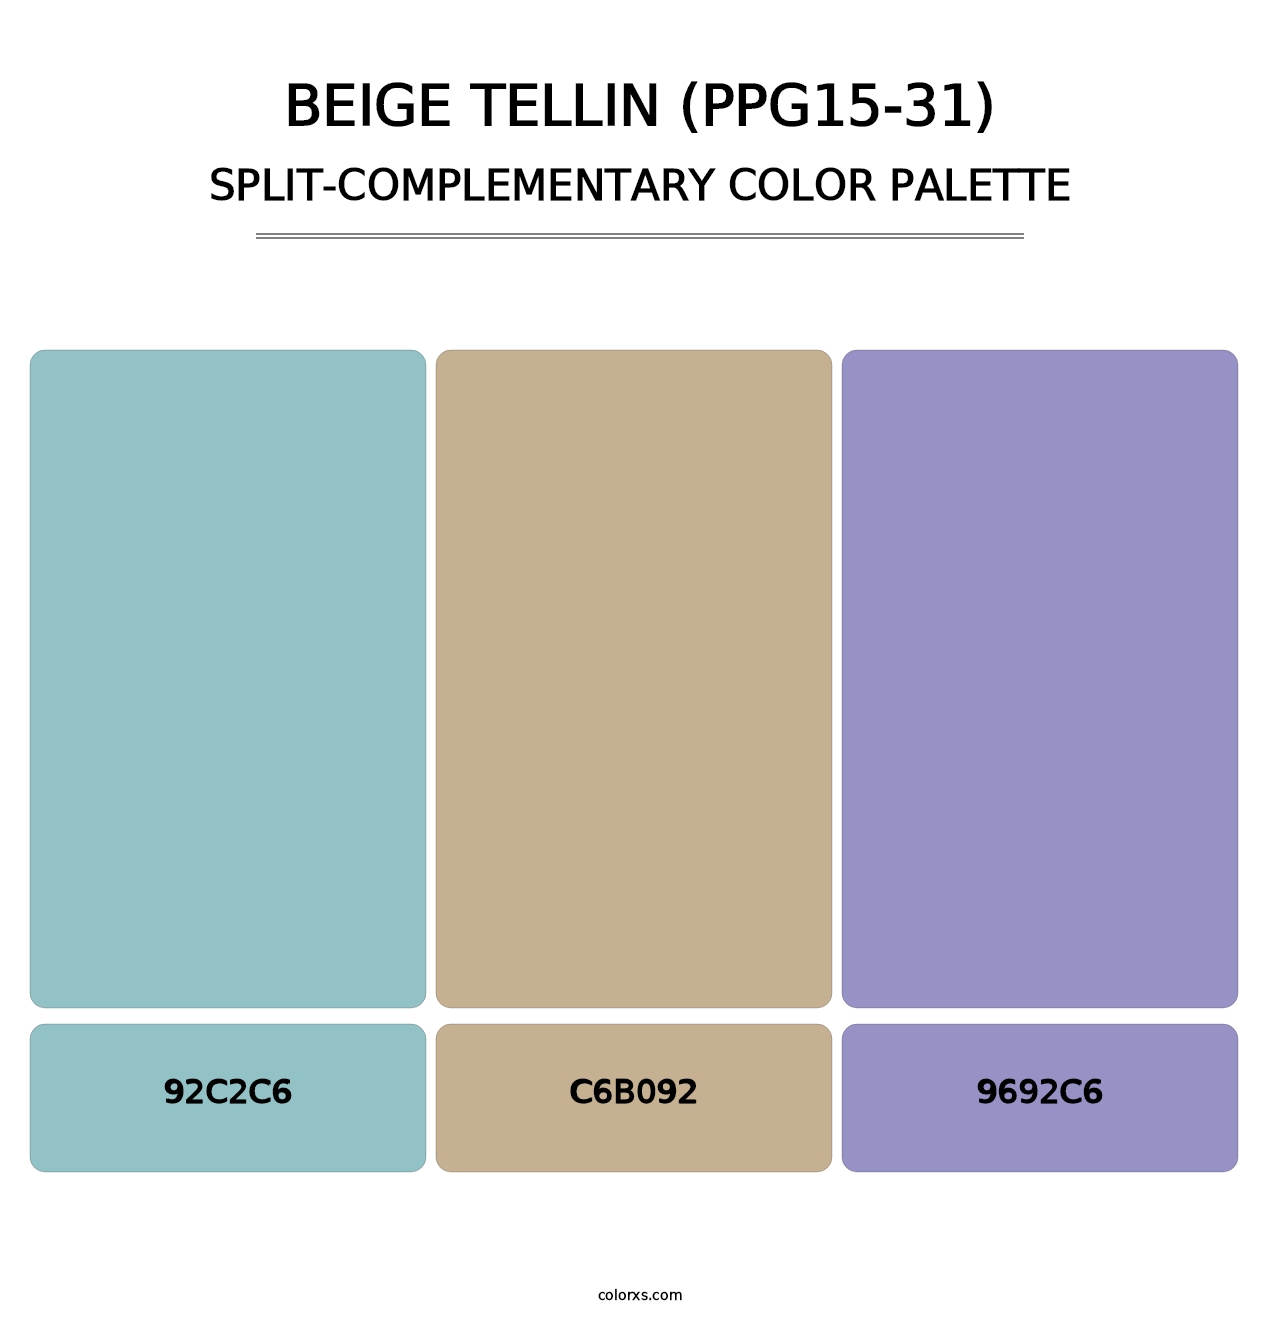 Beige Tellin (PPG15-31) - Split-Complementary Color Palette